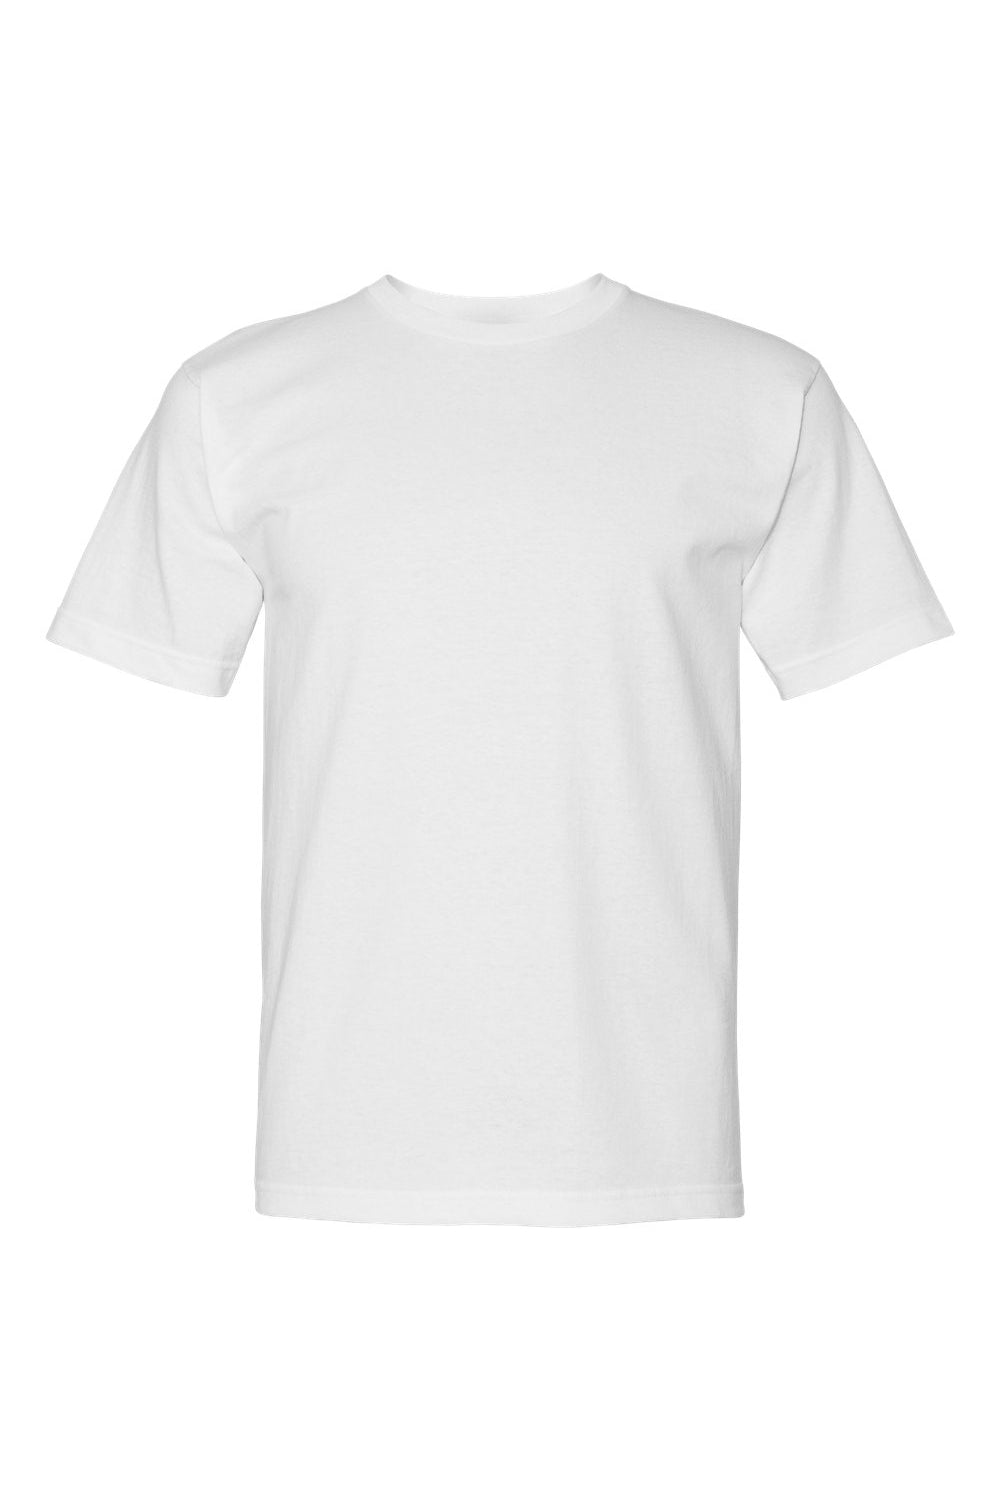 Bayside BA5040 Mens USA Made Short Sleeve Crewneck T-Shirt White Flat Front